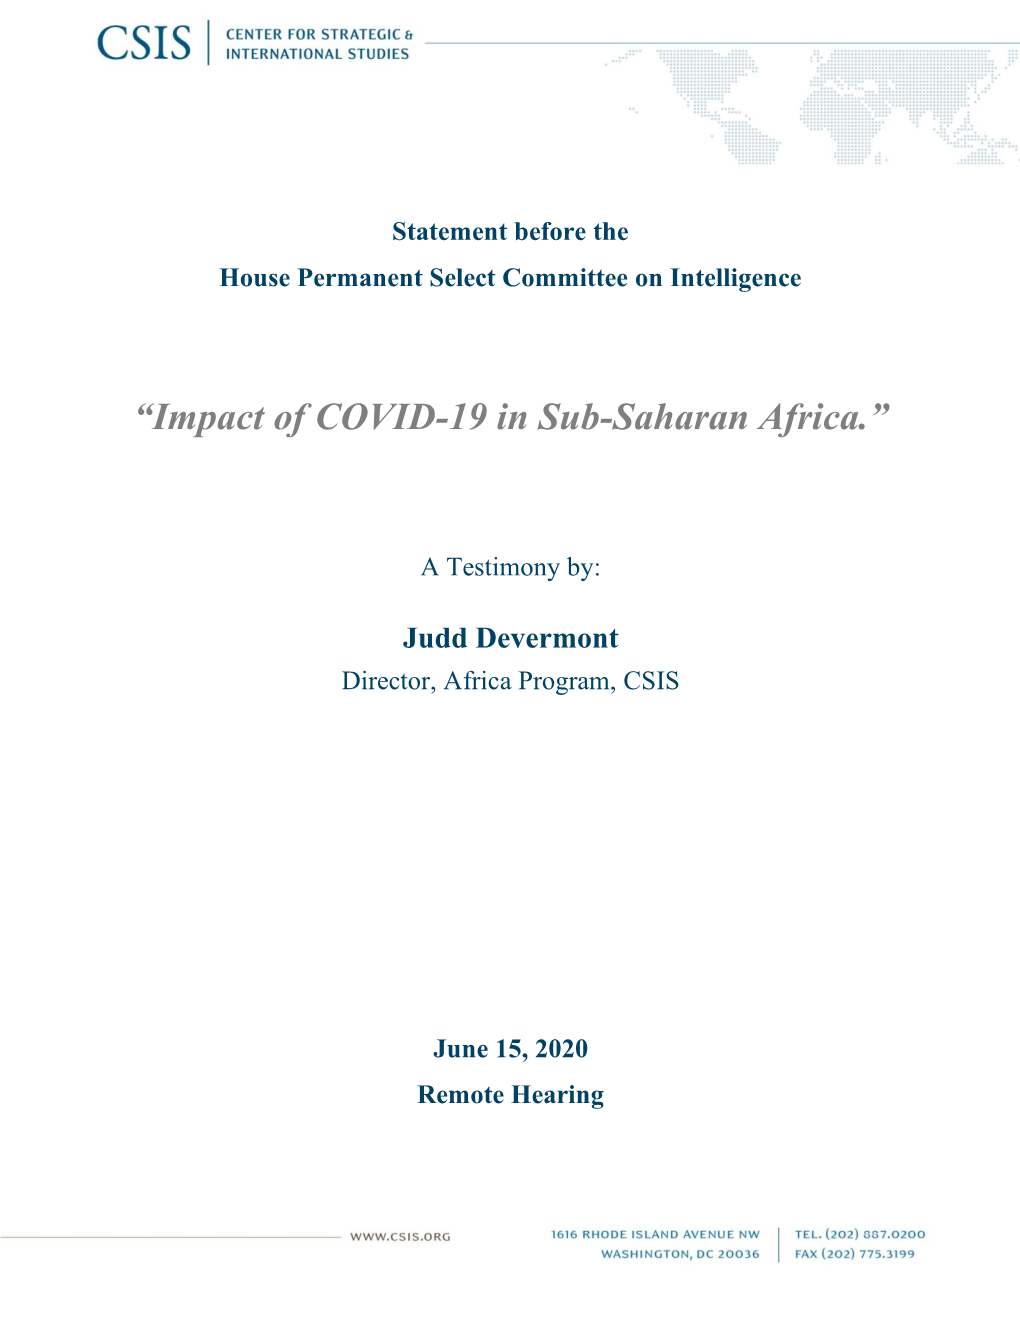 “Impact of COVID-19 in Sub-Saharan Africa.”